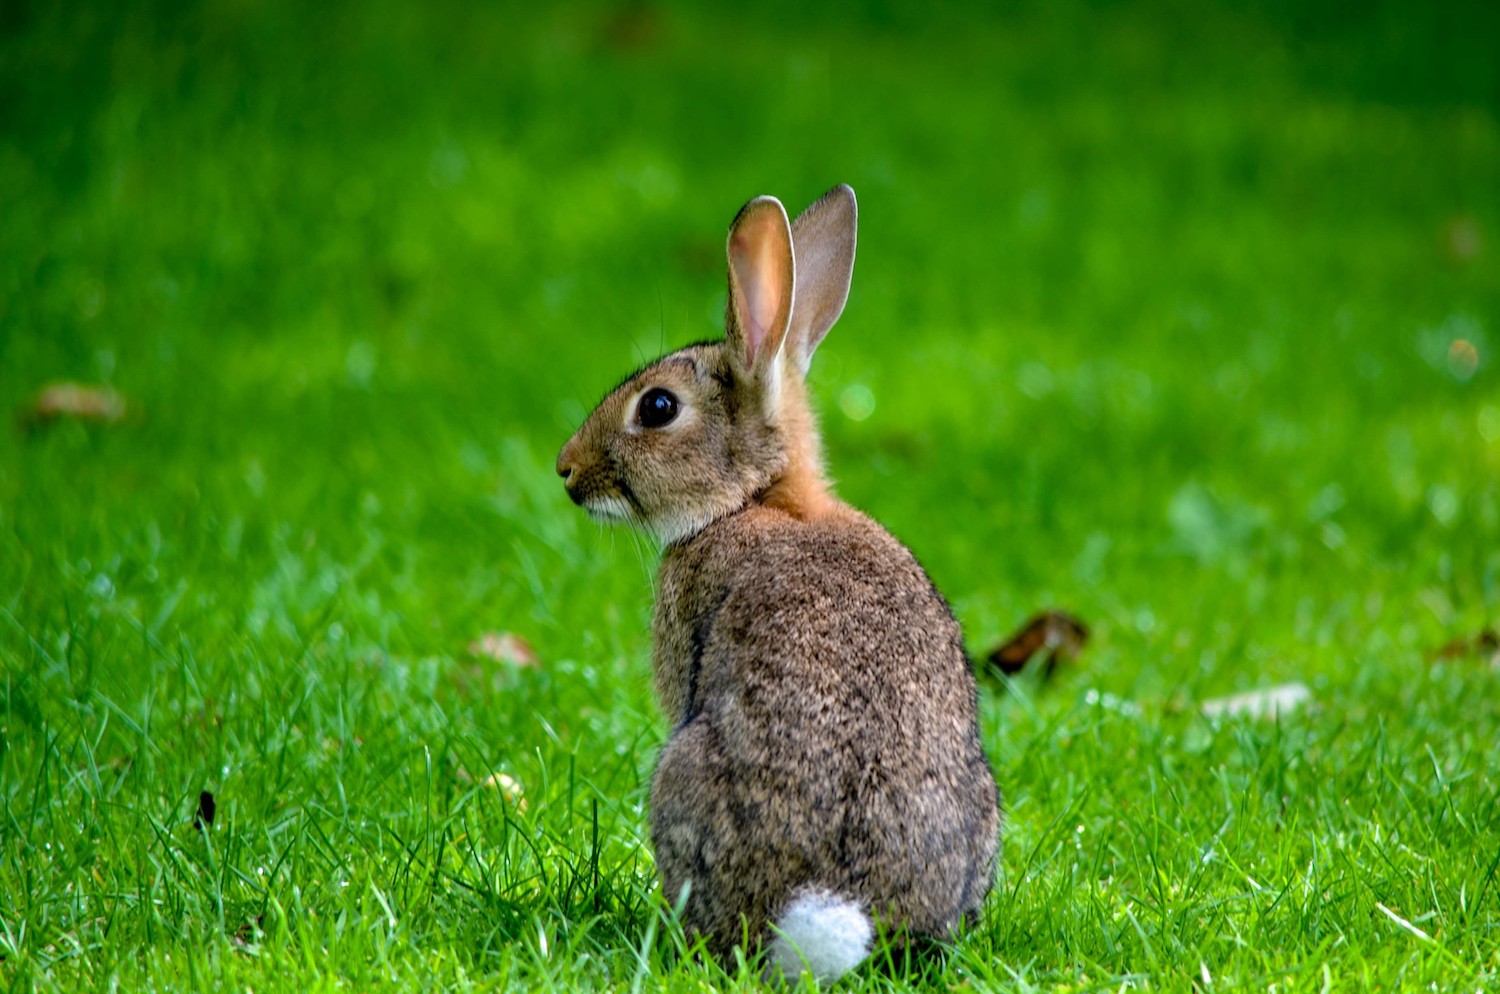 A rabbit sitting in a field